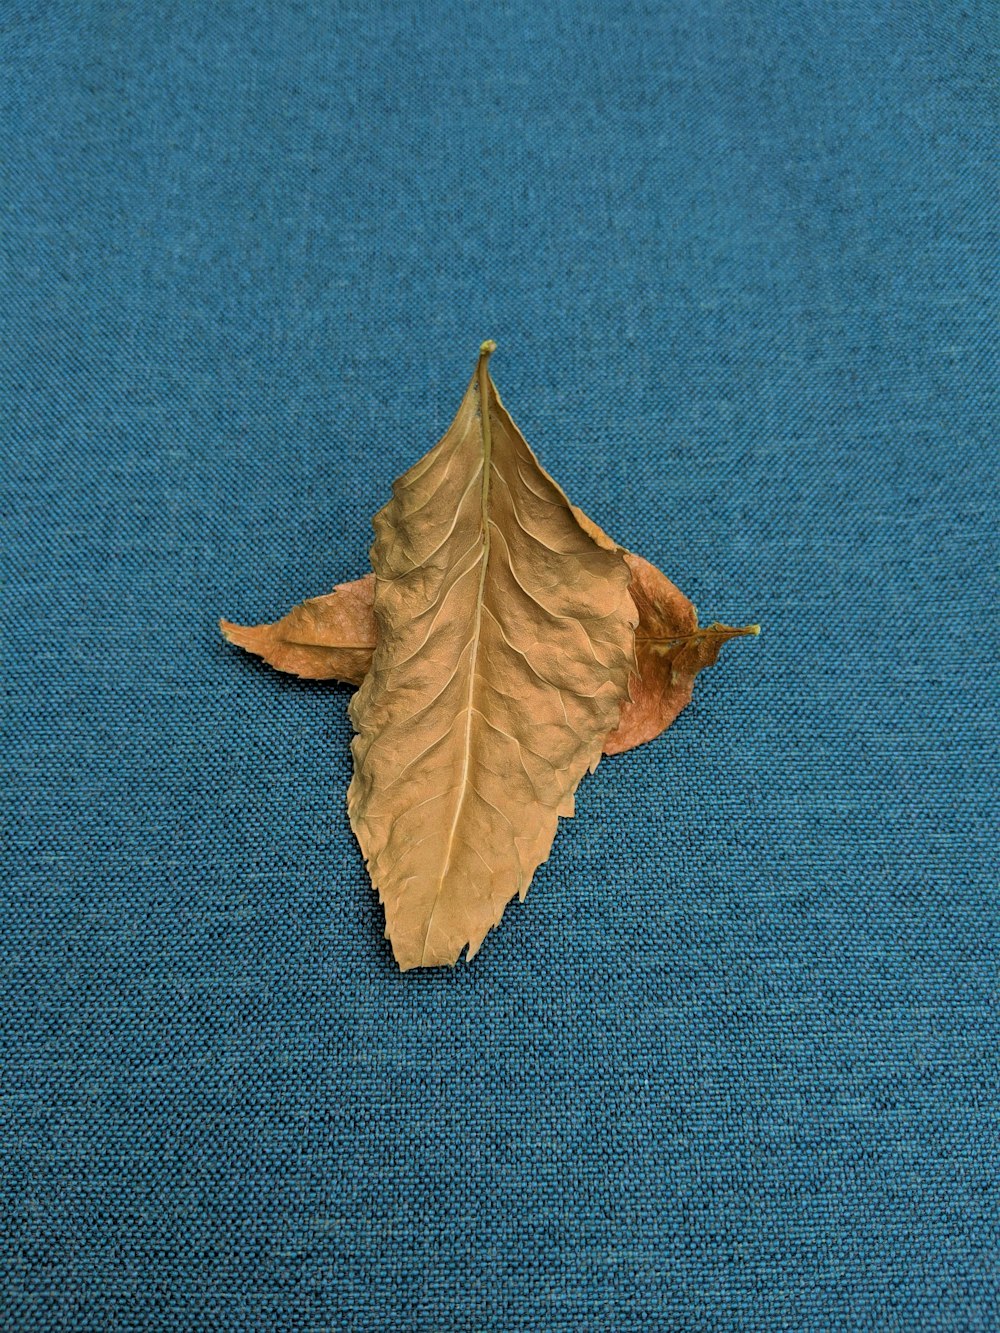 brown dried leaf on blue textile